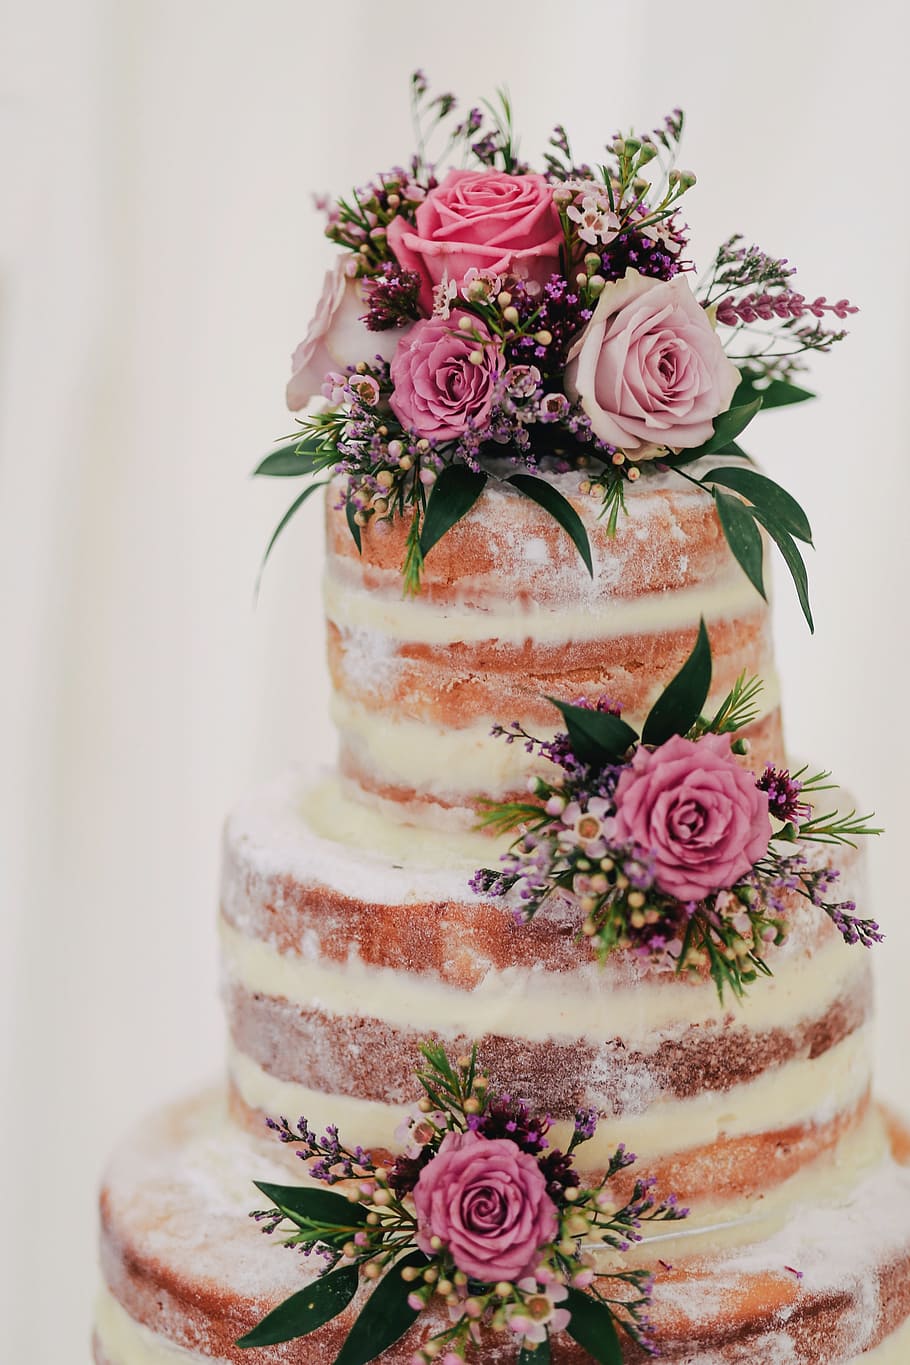 merah, pink, mawar, aksen kue, closeup, foto, pernikahan, kue, bunga, lapisan gula